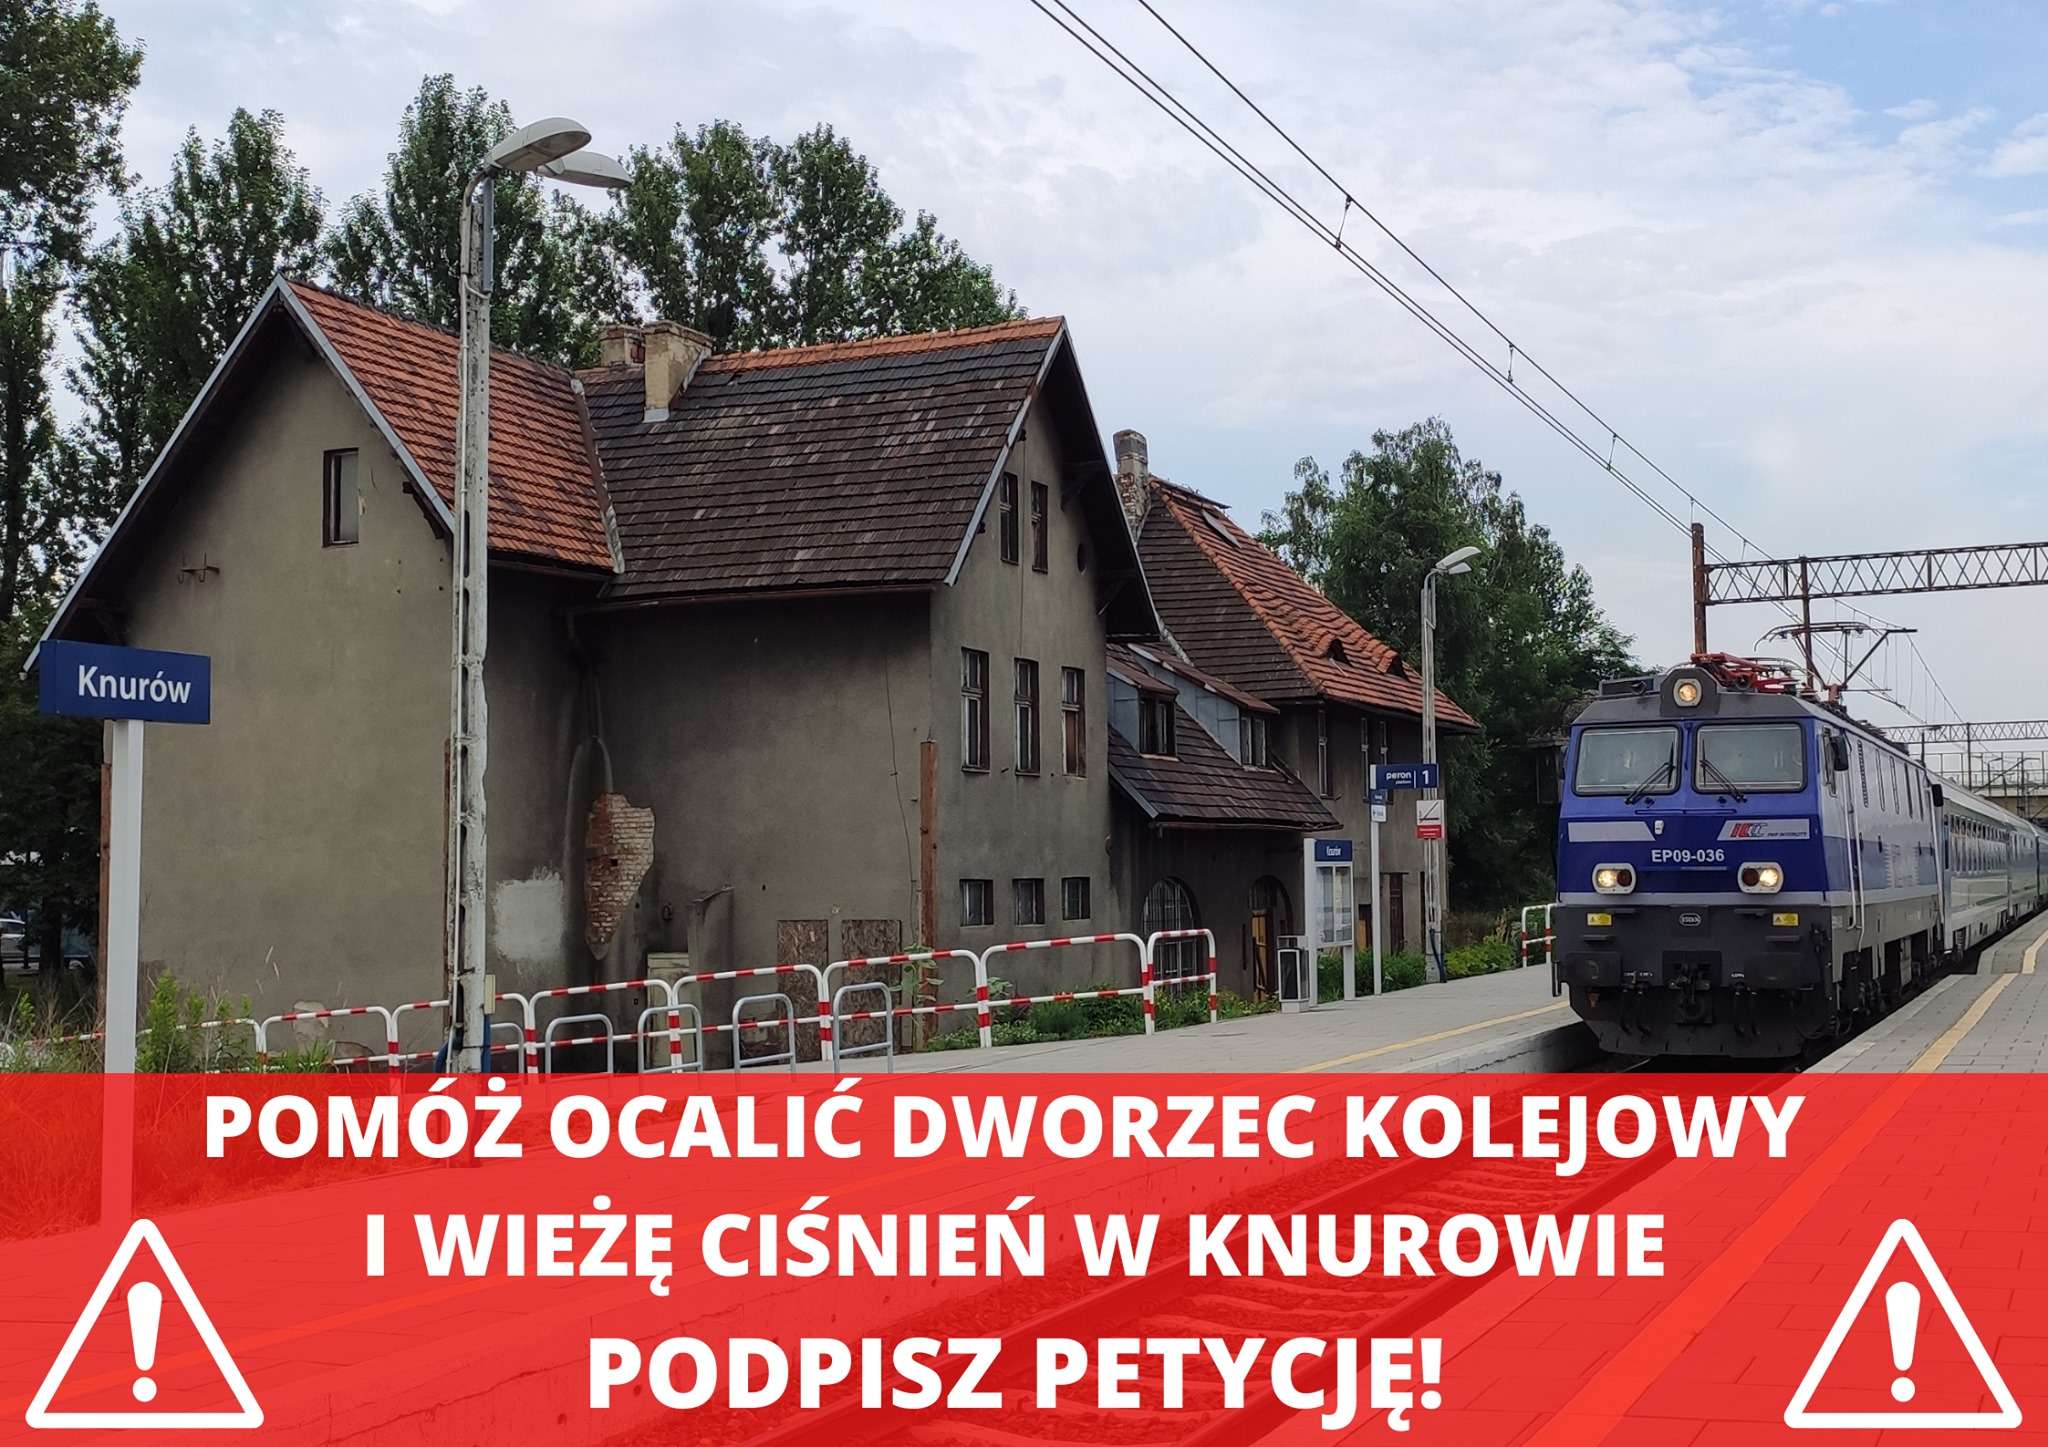 Facebook.com / Kolej na Knurów.